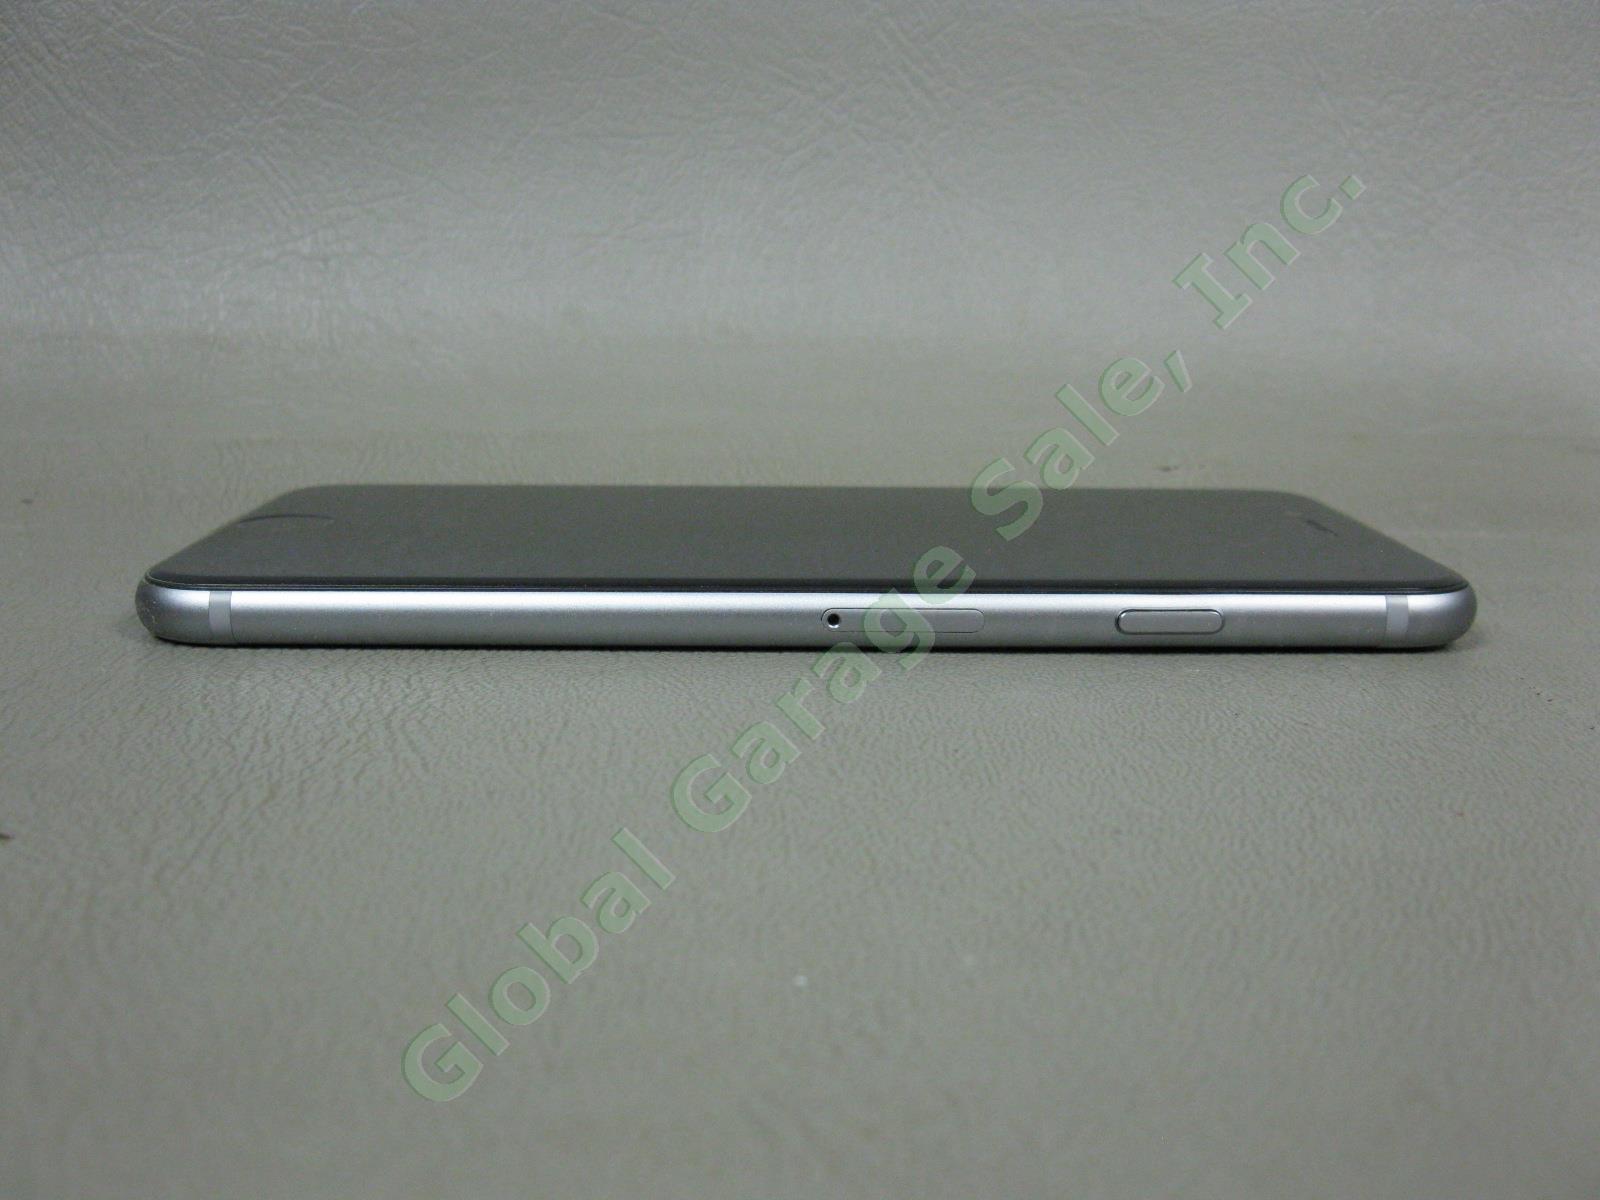 Apple iPhone 6 A1549 MG5X2LL/A Verizon 128GB? No Power For Repair Perfect Screen 4